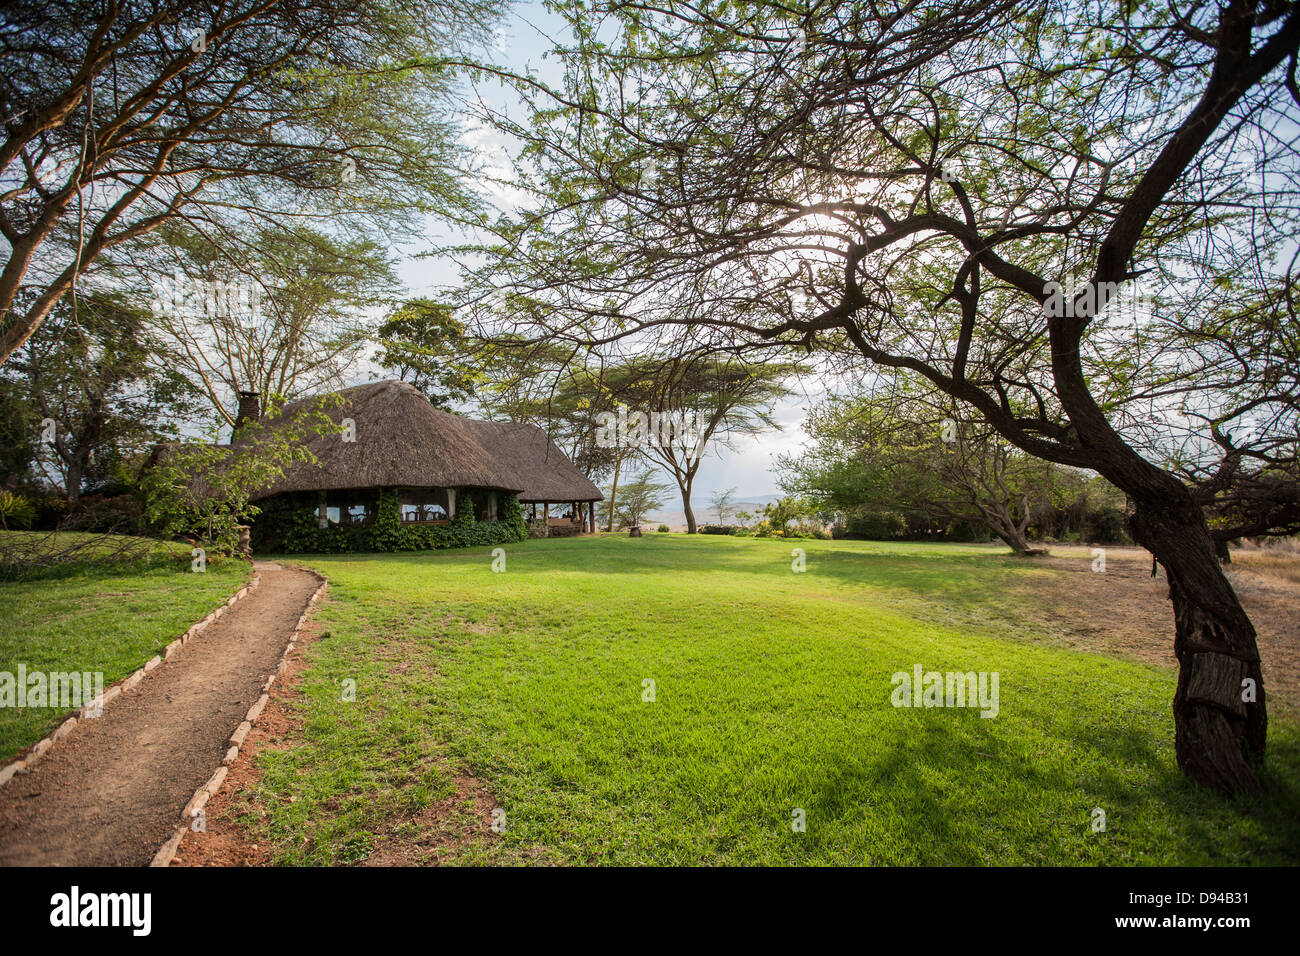 safari lodge on a grassy hill side Stock Photo